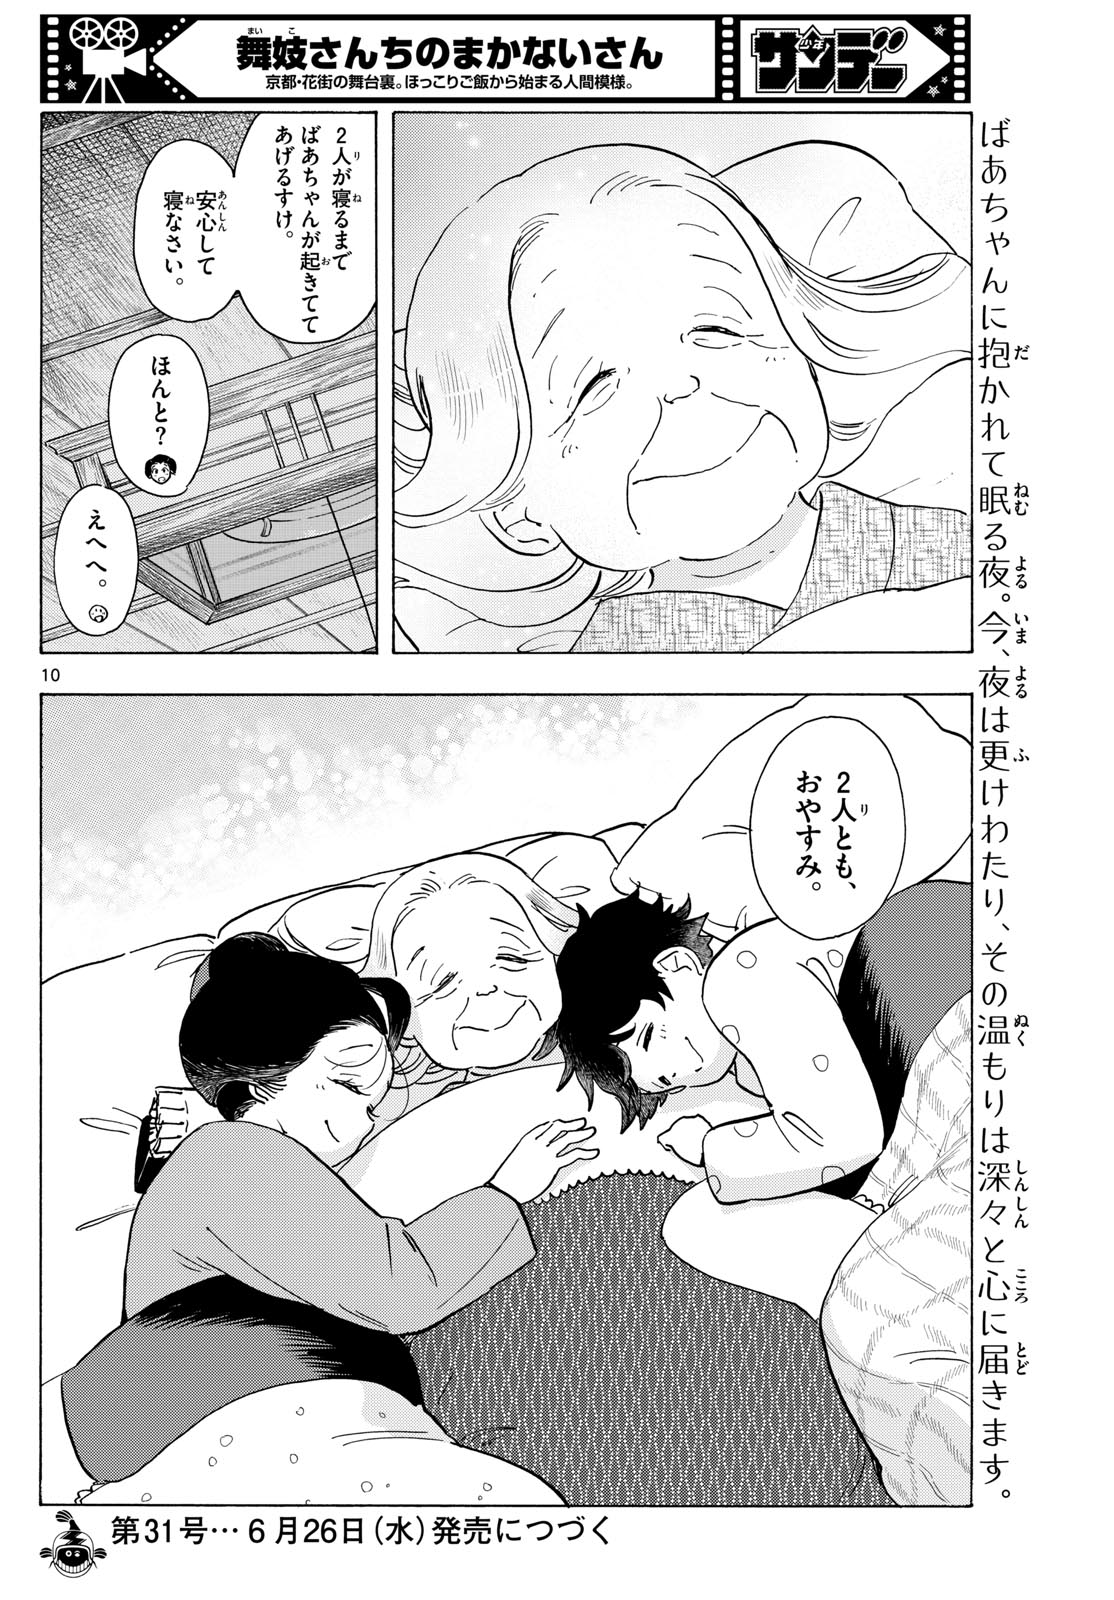 Maiko-san Chi no Makanai-san - Chapter 305 - Page 10